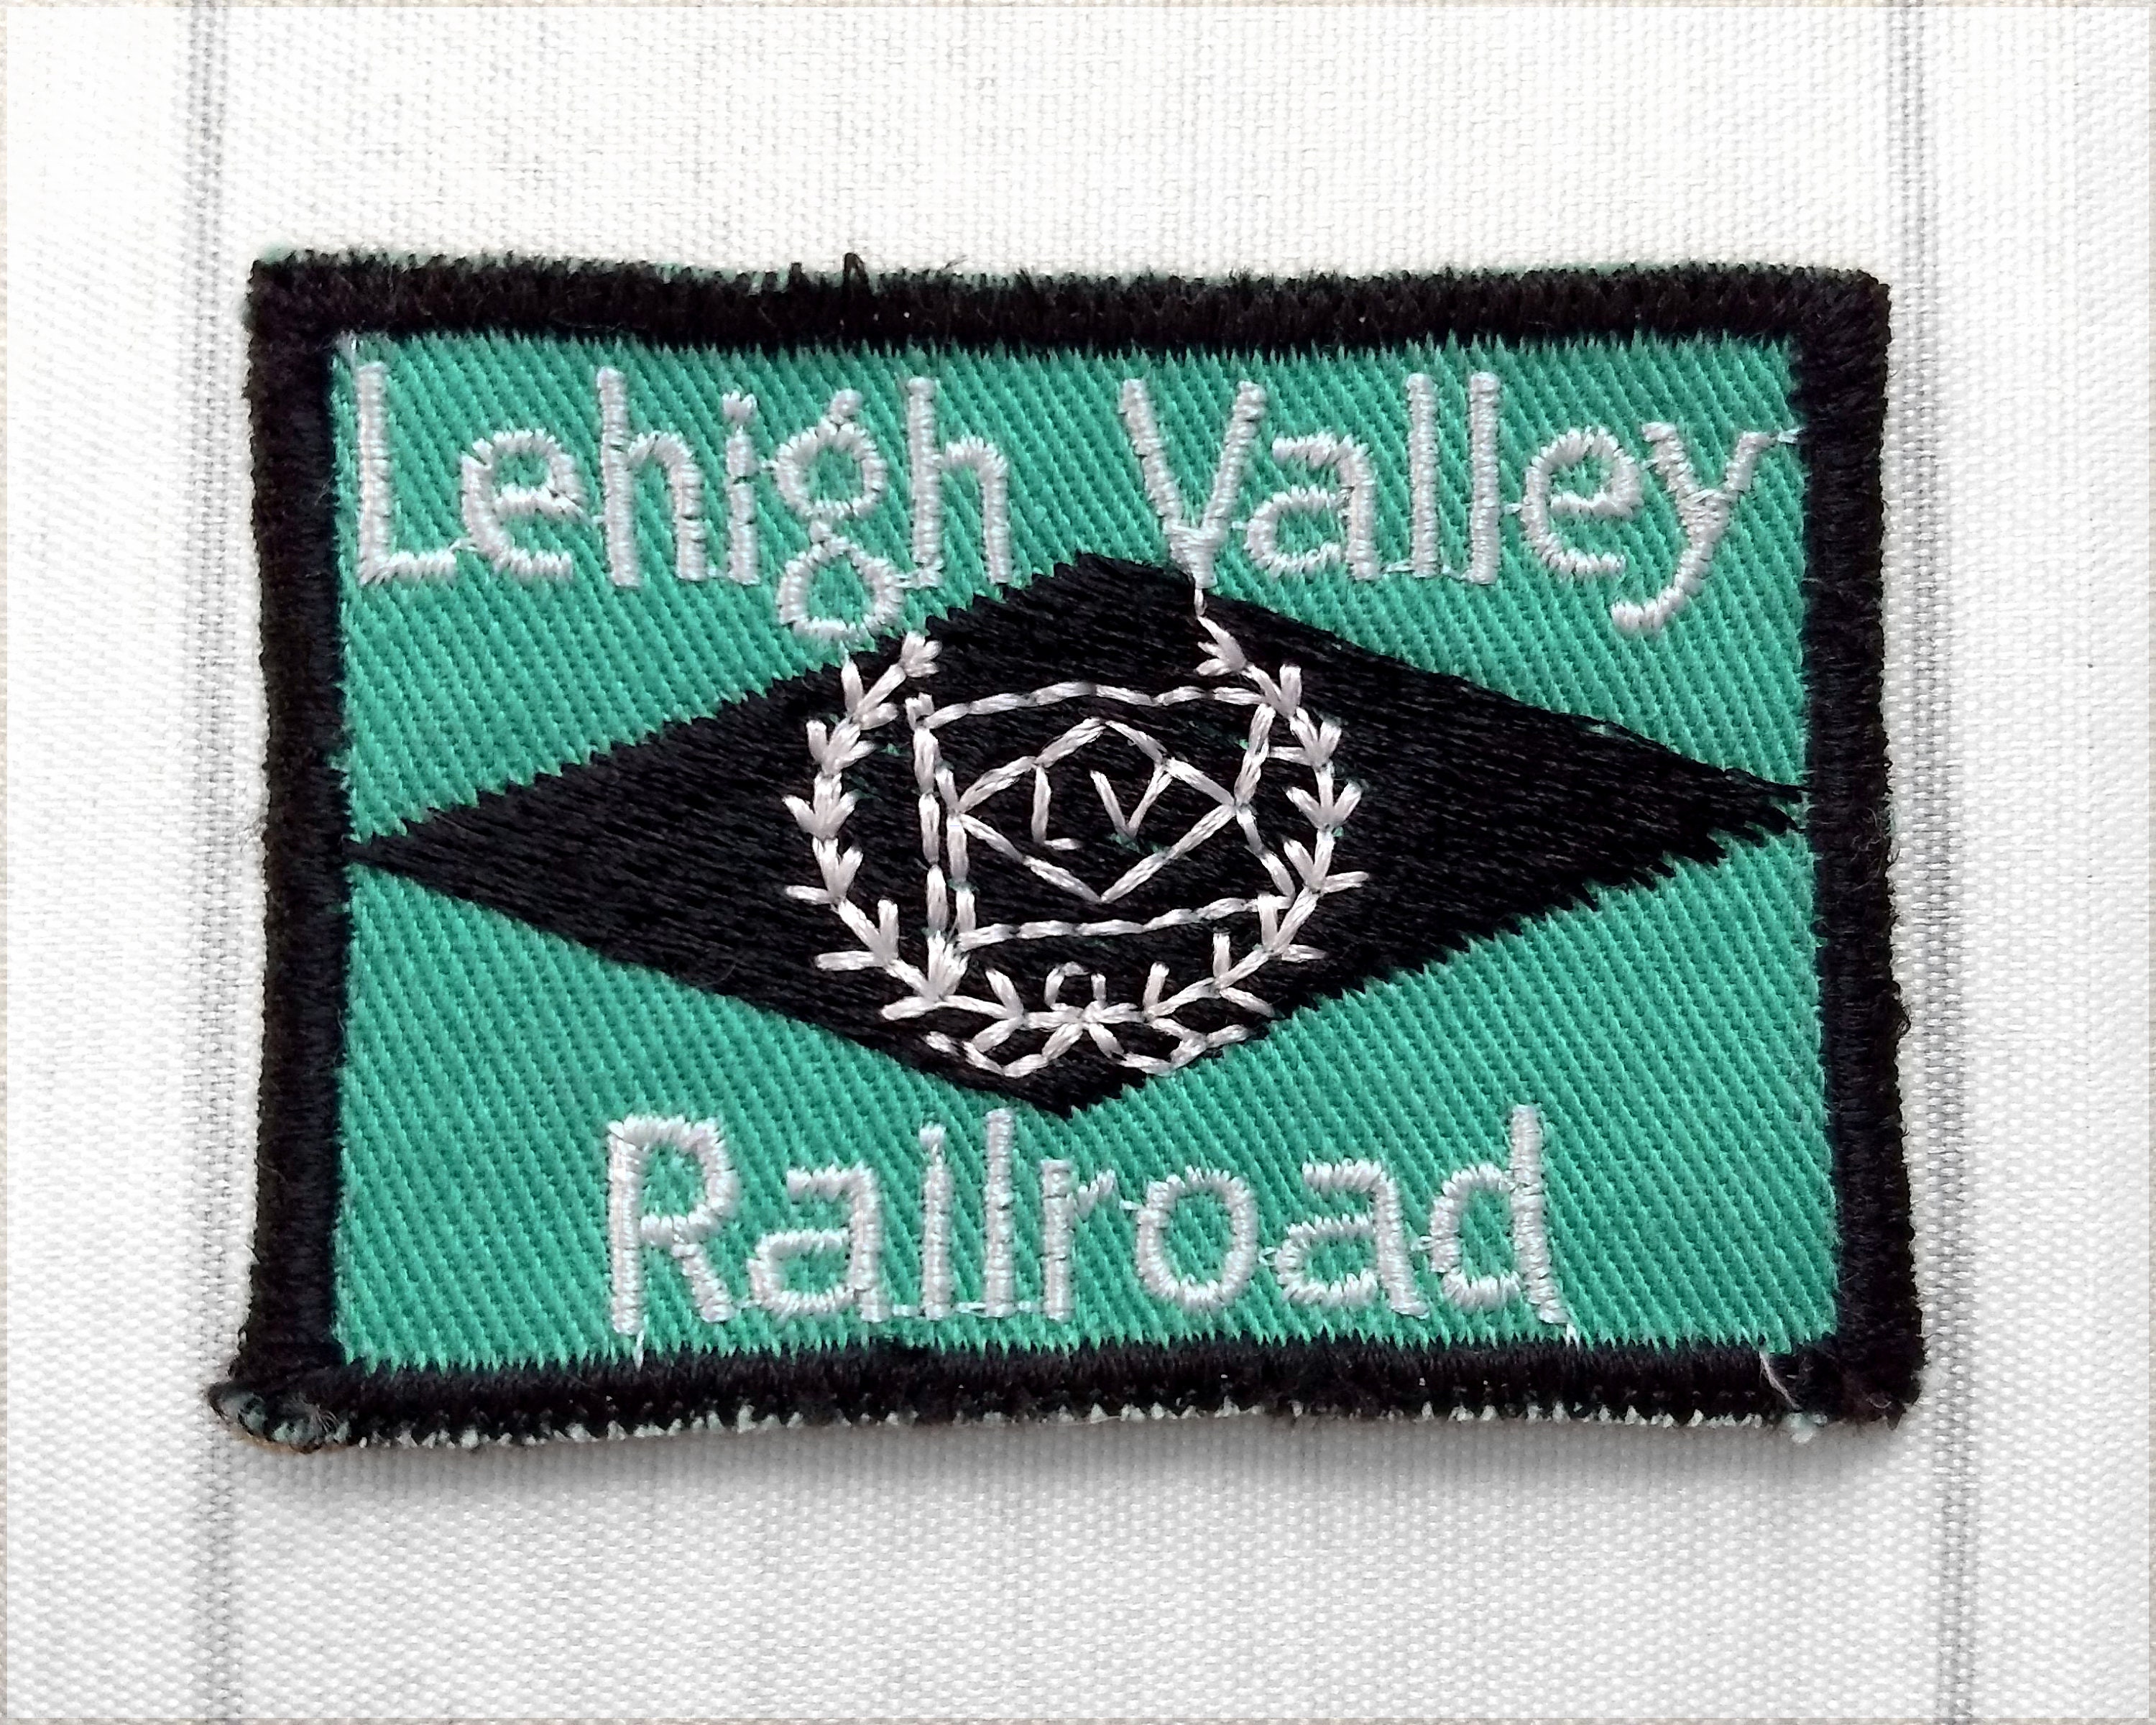 LeHigh Valley Railroad (Railway) Iron-On Embroidered Clothing Patch Train  Souvenir Logo Emblem Collectible Memorabilia Applique Gift Idea